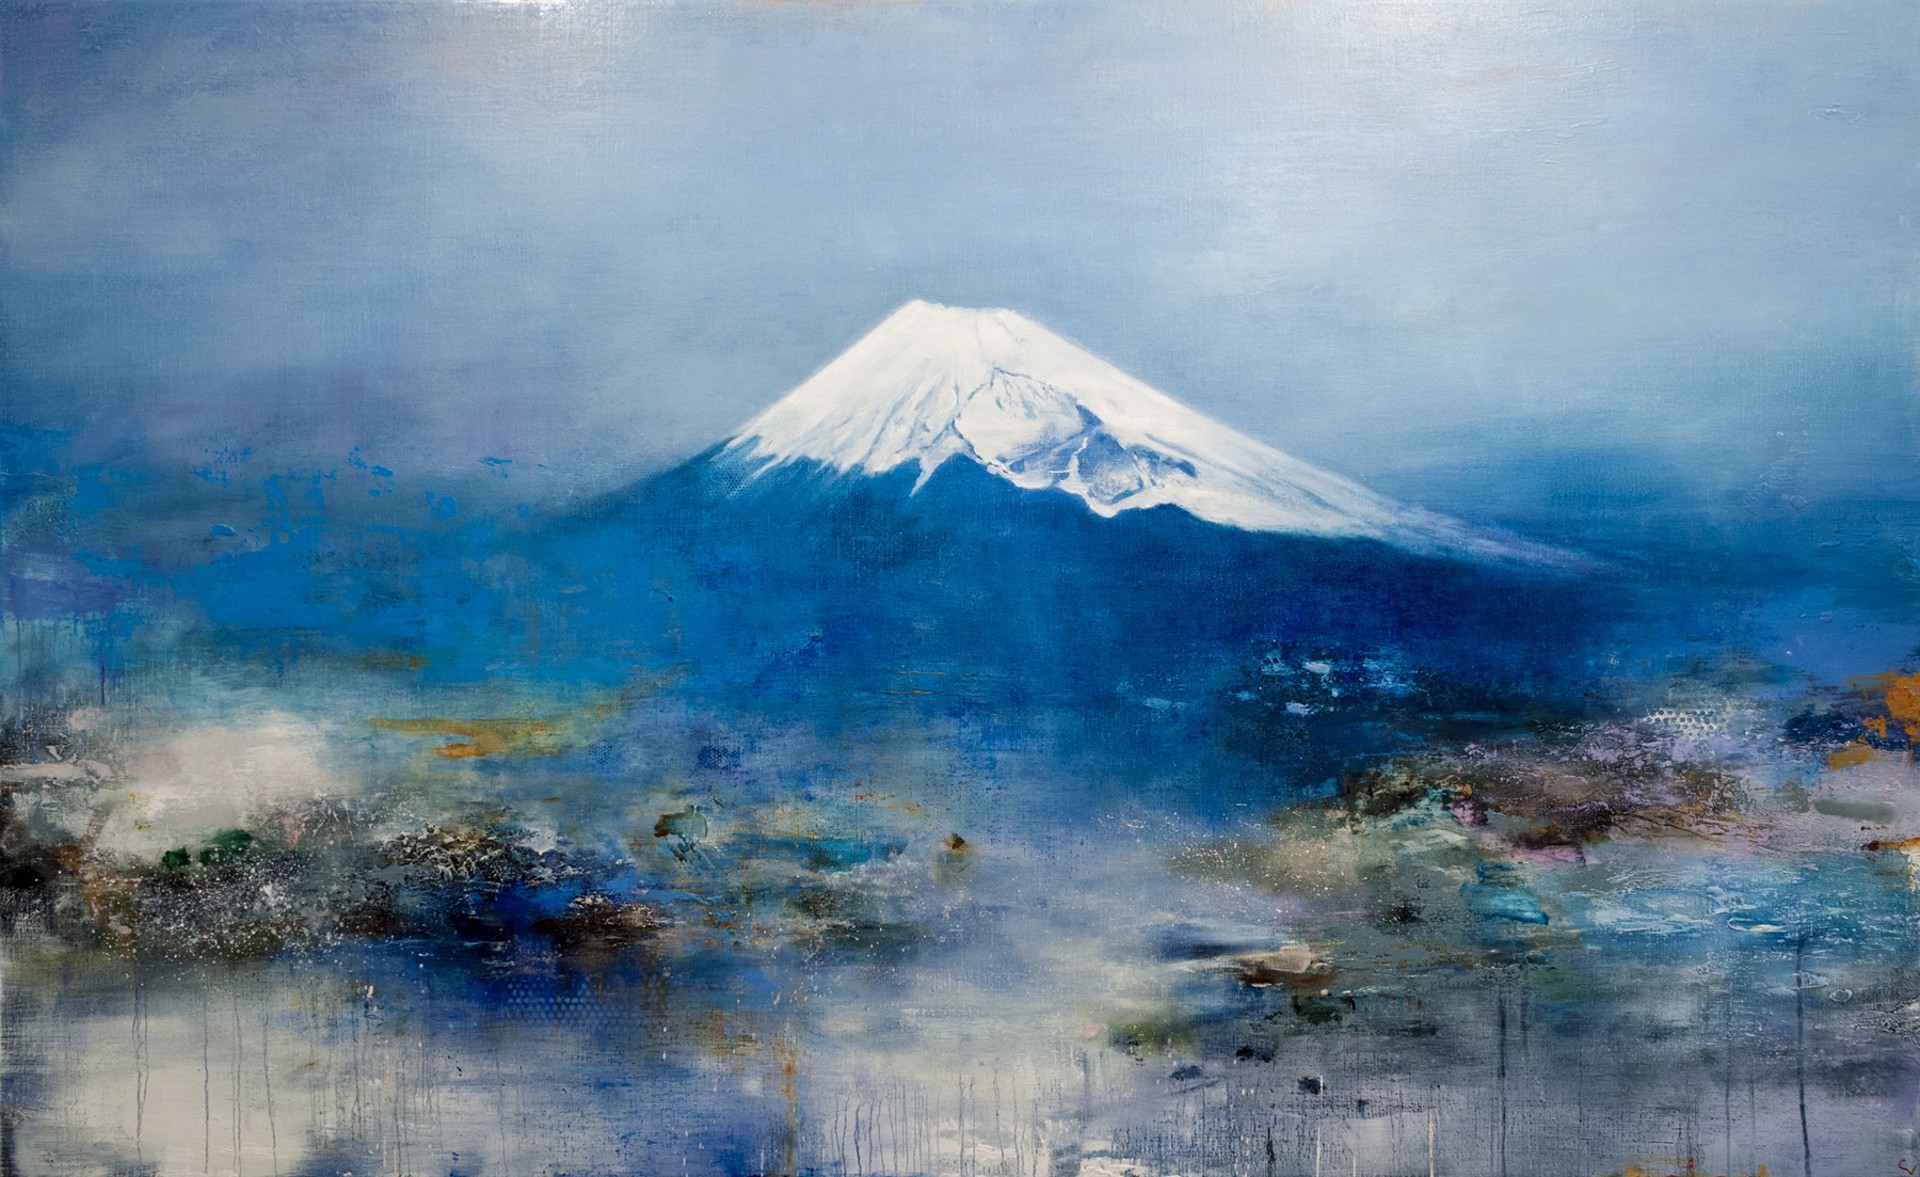 Dreaming of Mt. Fuji by Chris Veeneman